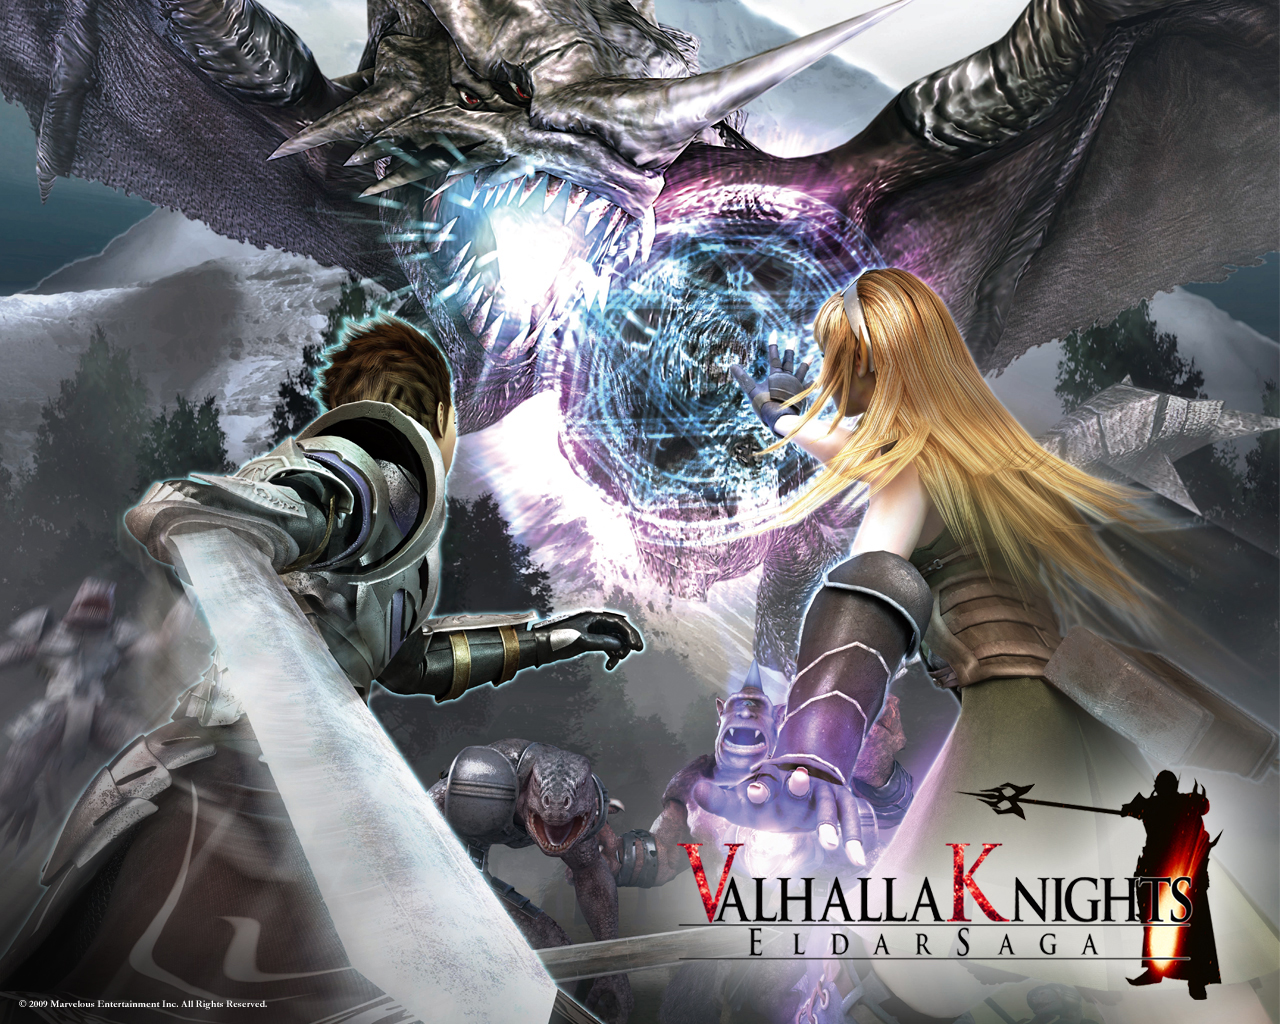 Valhalla Knights Elder Saga Wallpaper - Valhalla Knights Eldar Saga Wii Cover , HD Wallpaper & Backgrounds